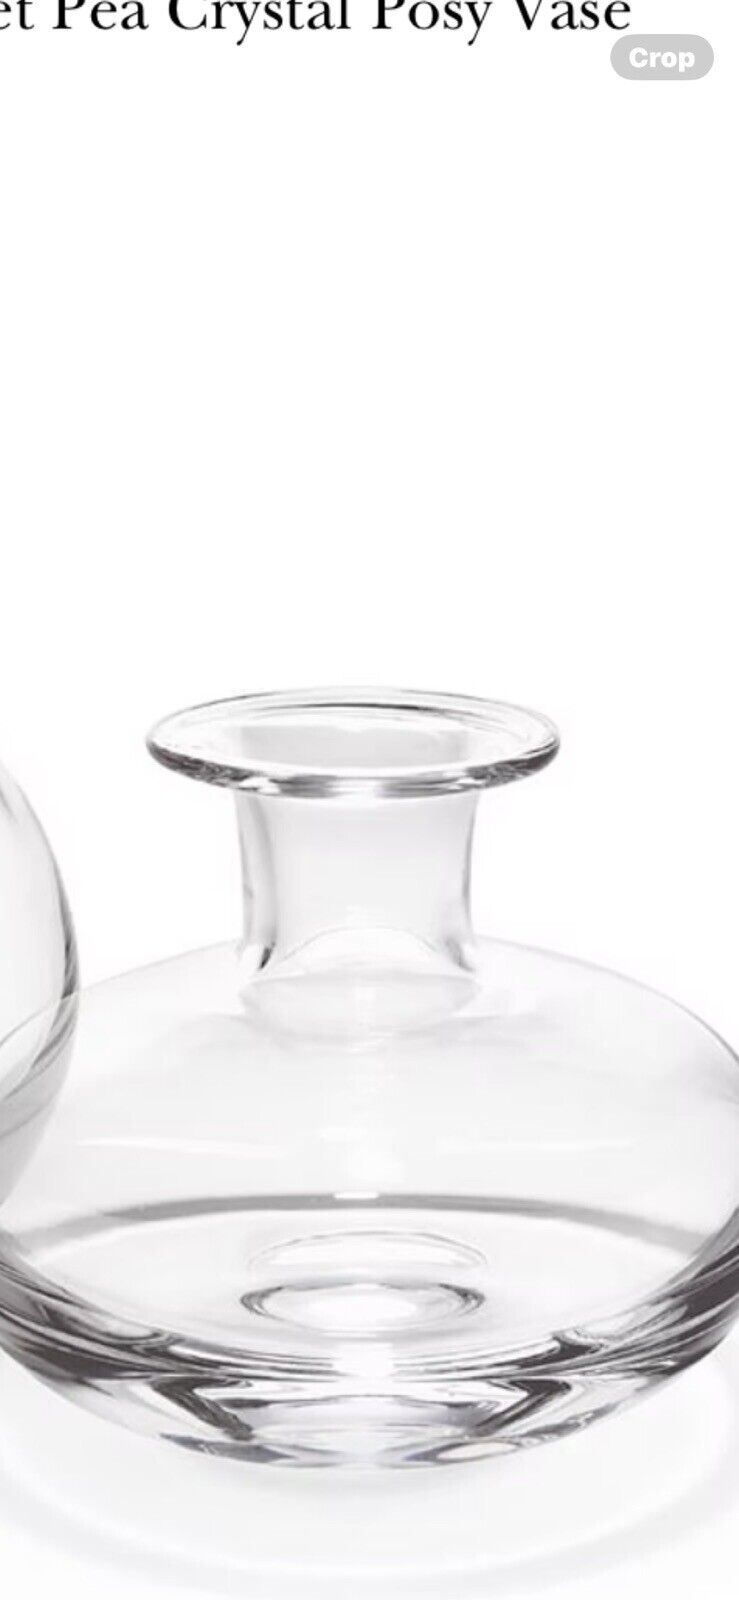 NEW - Lenox KATE SPADE Sweet Pea Posy Crystal Vase 3.5”